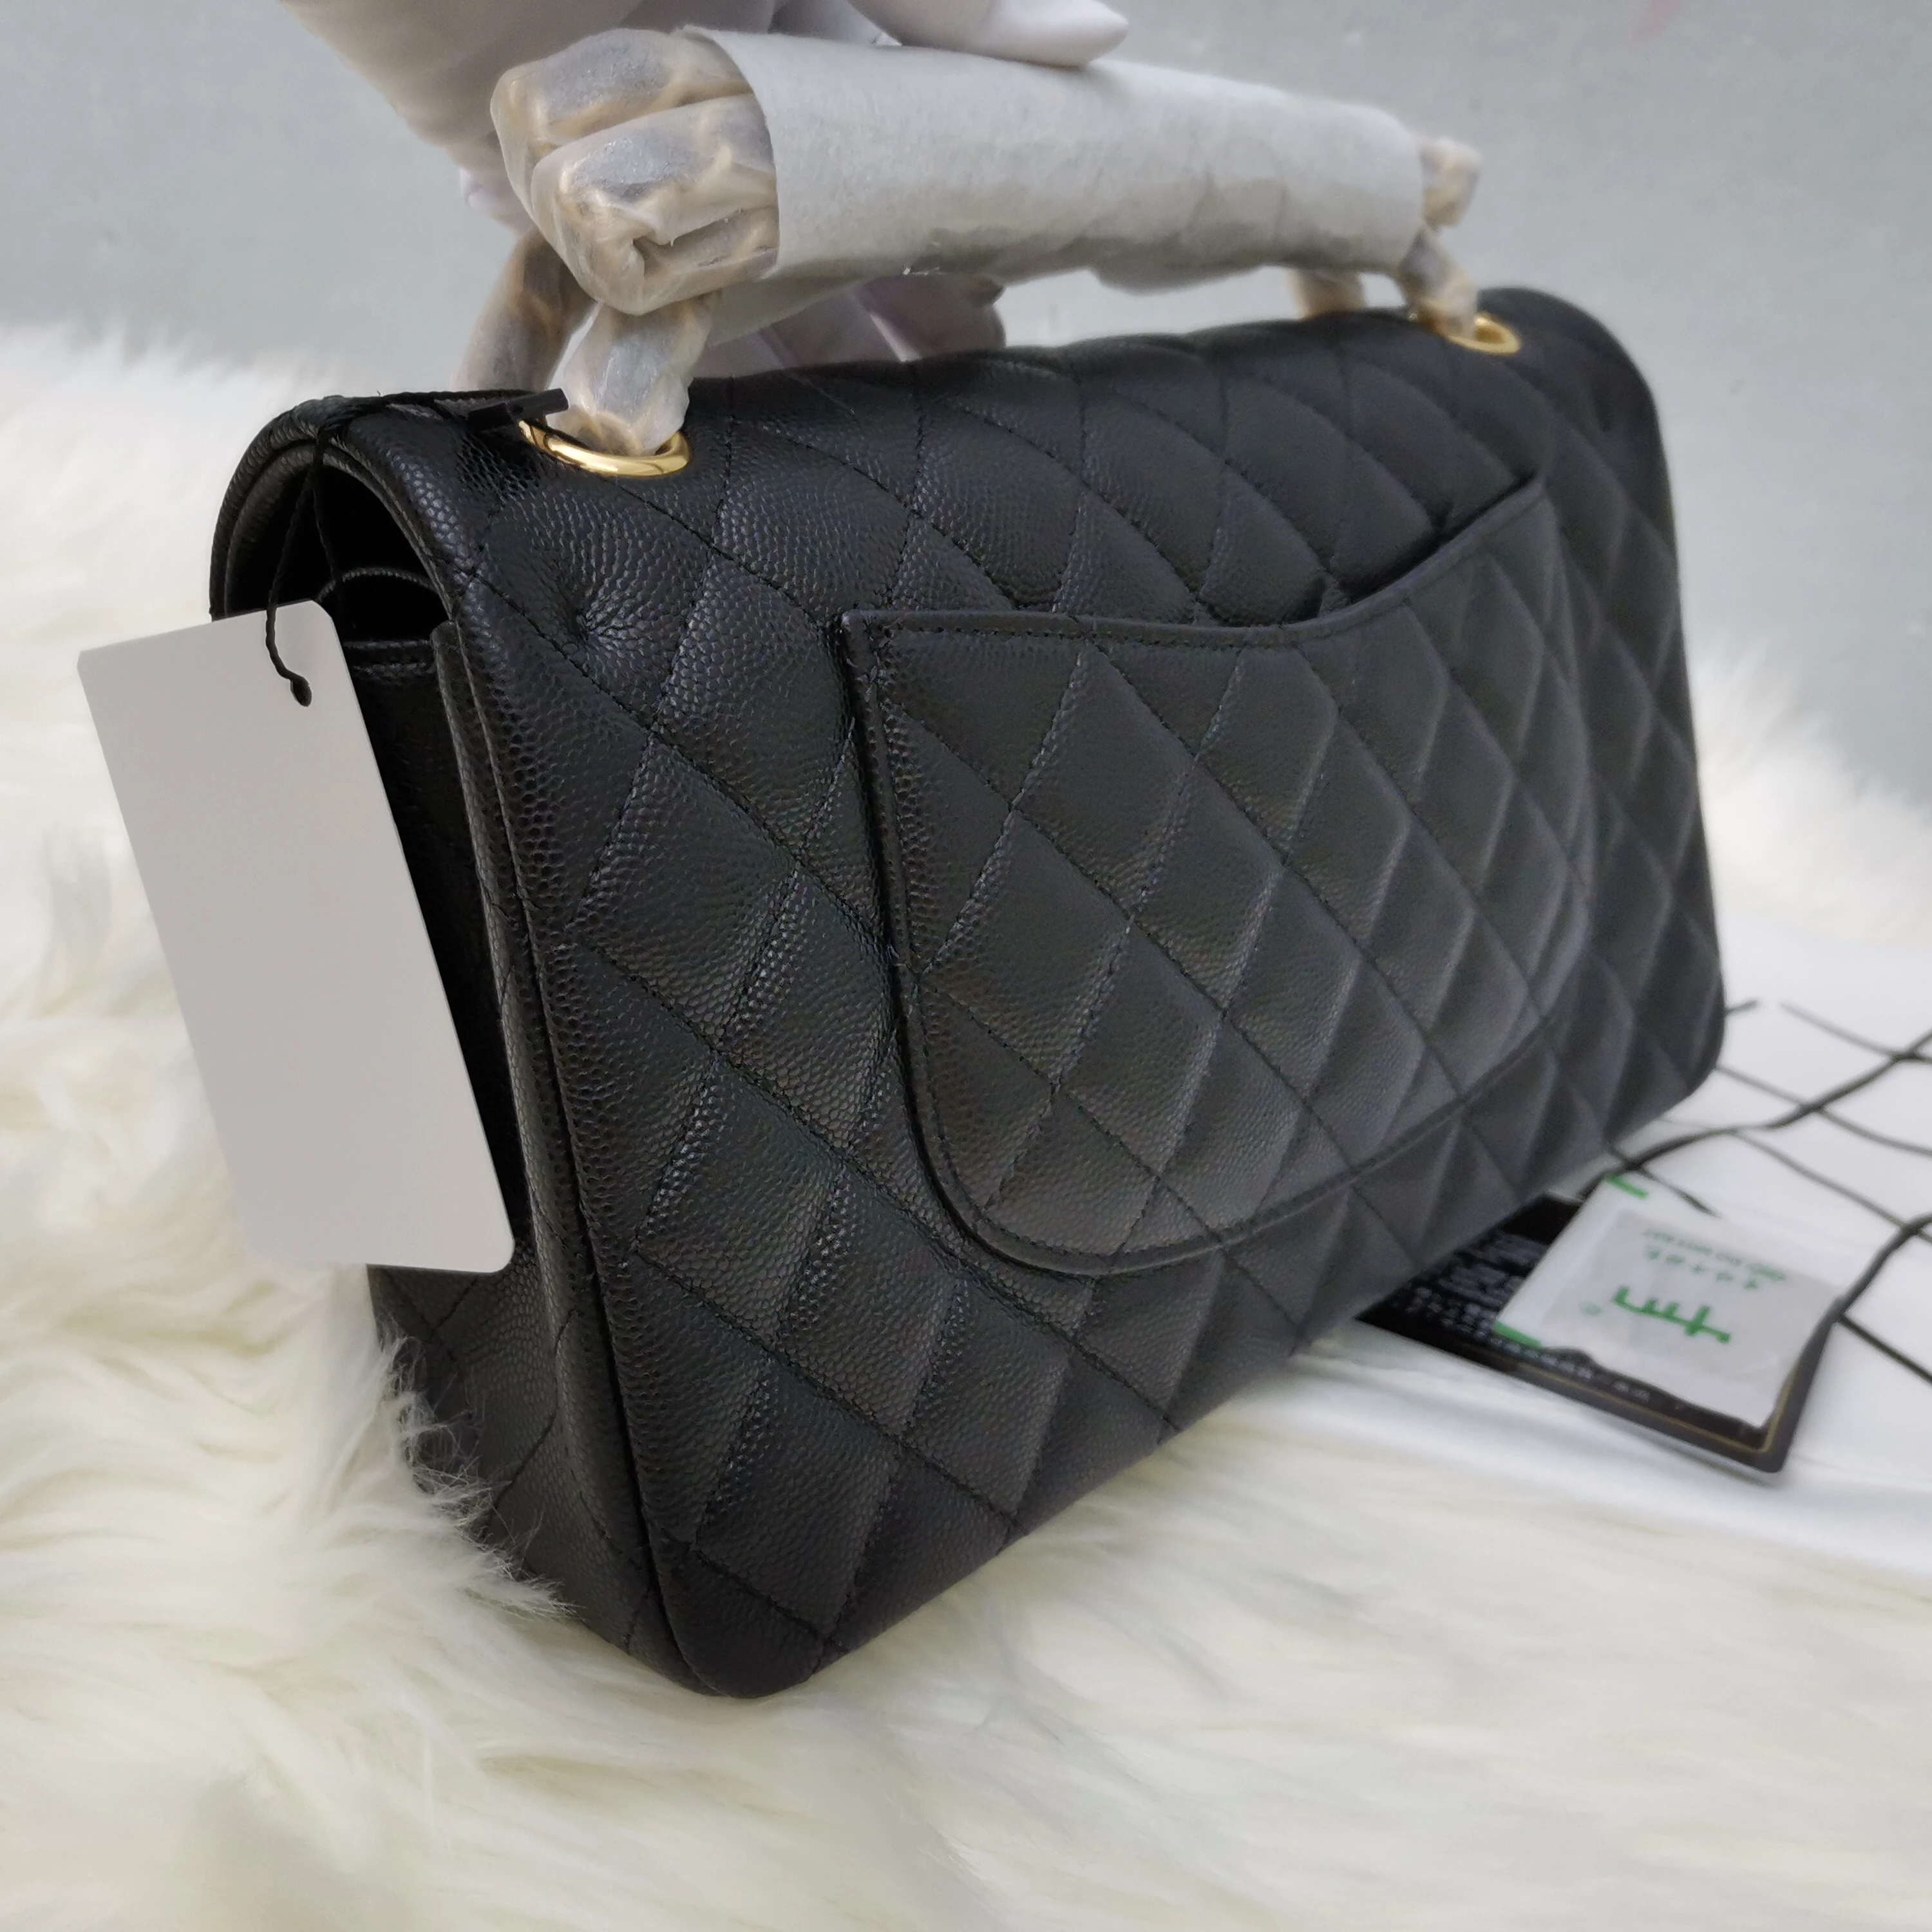 

calfskin handbags CF caviar bag real leather 25 cm black handbag mirror quality for lady famous brand luxury handbags for women, Many colors